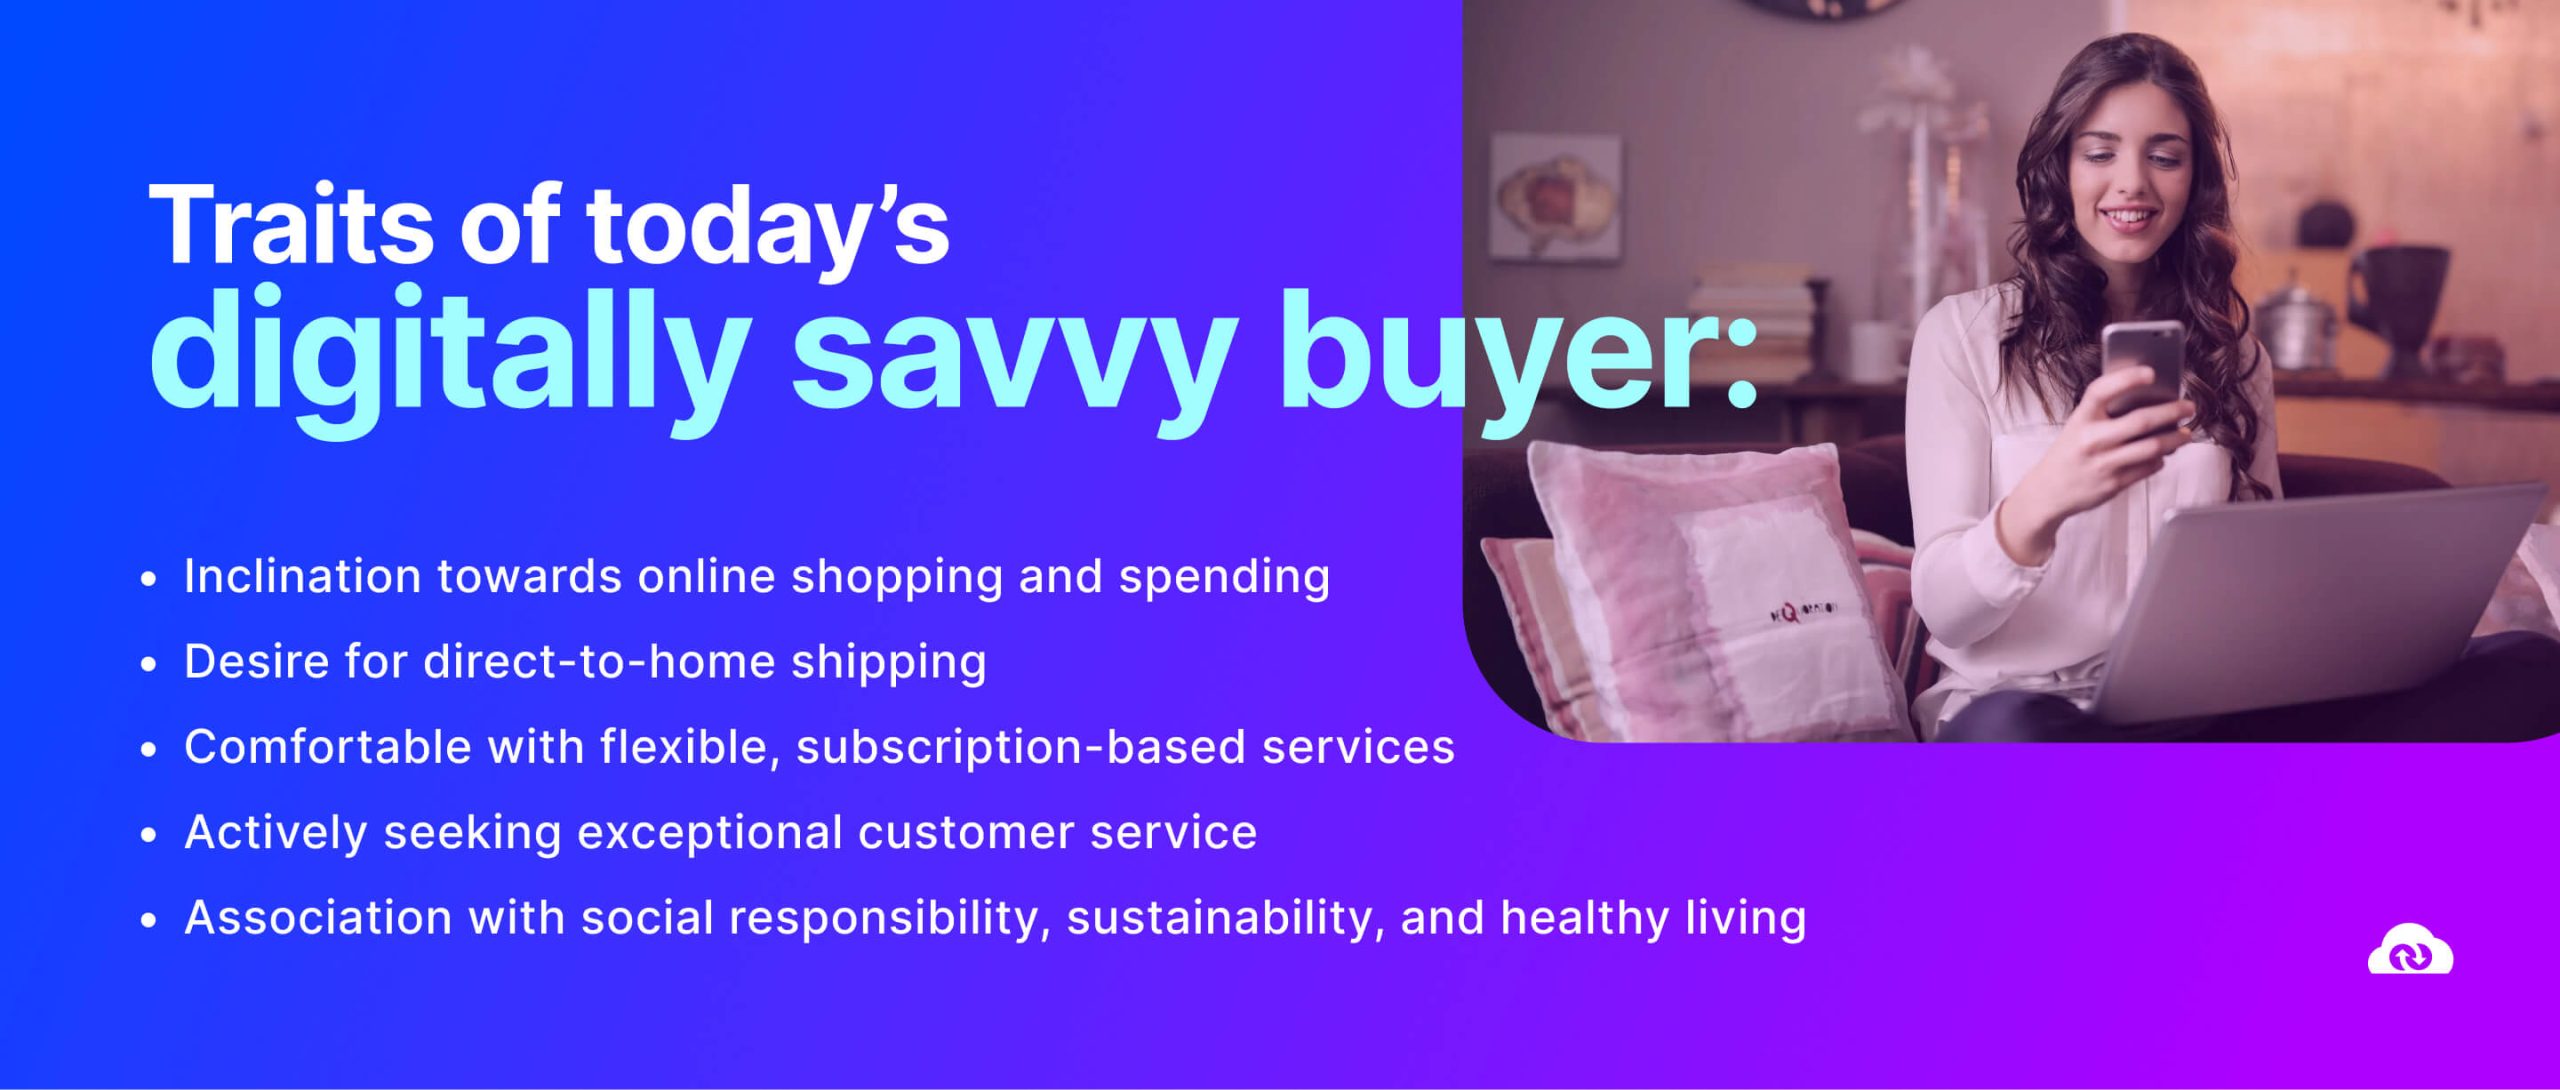 Traits of today's digitally savvy buyer